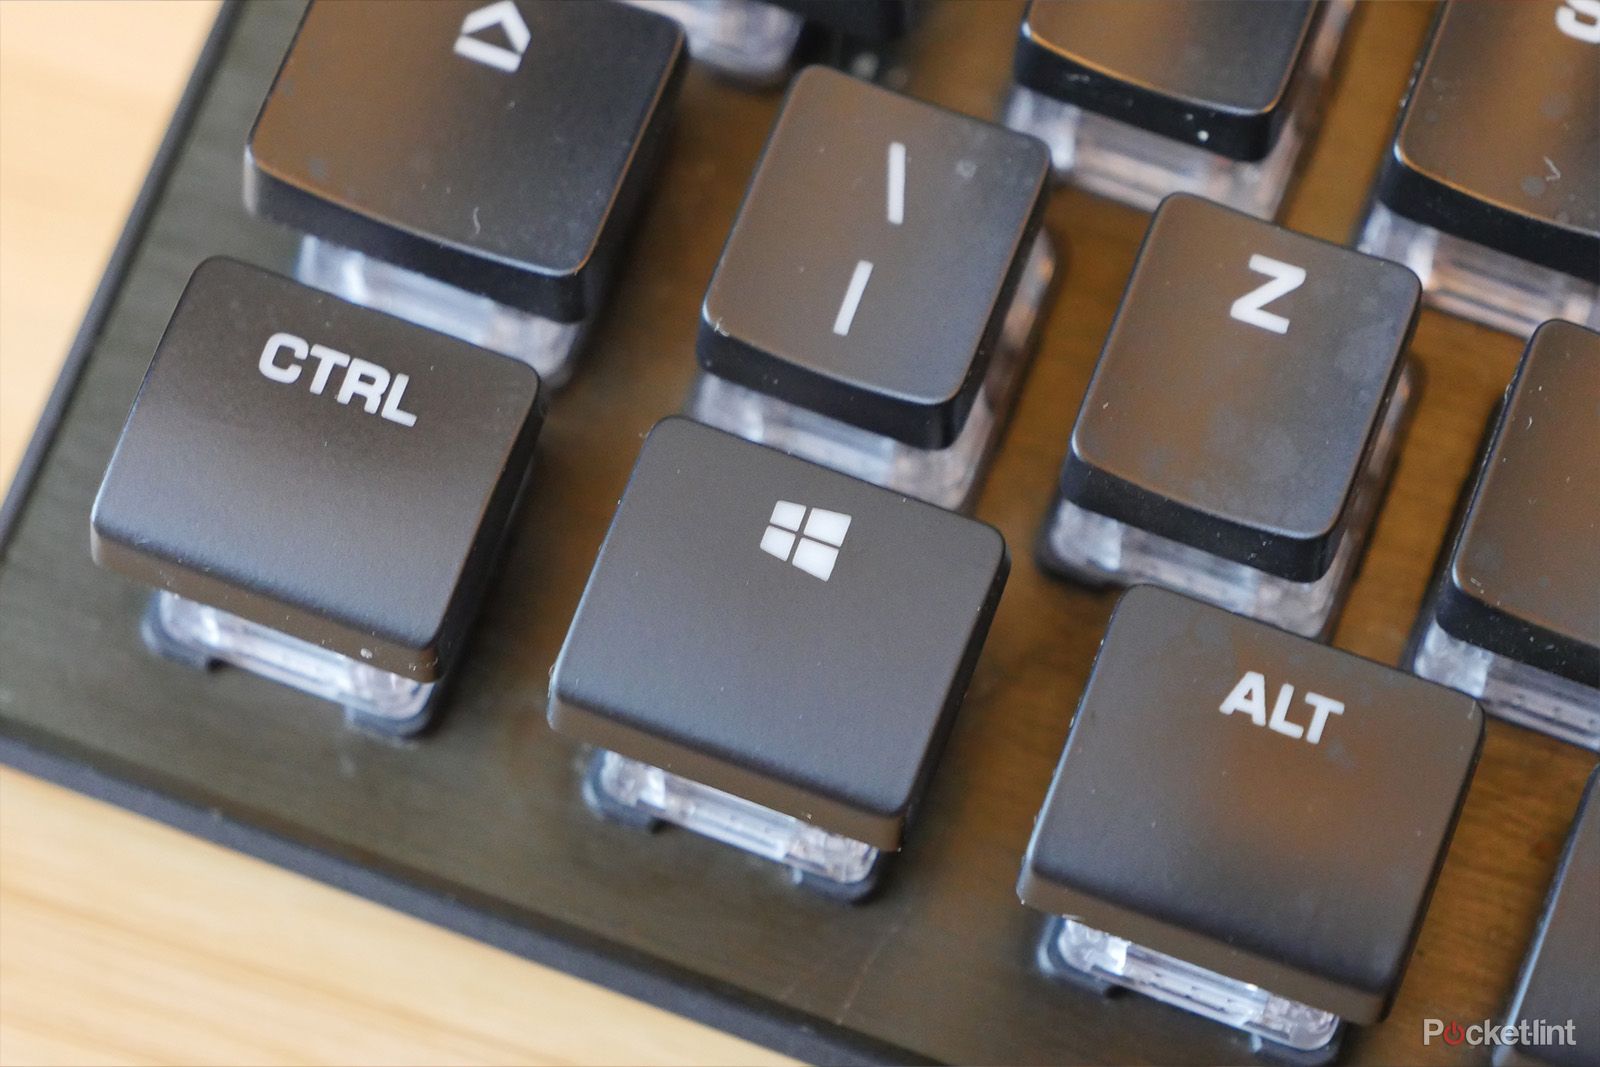 Windows keyboard shortcuts